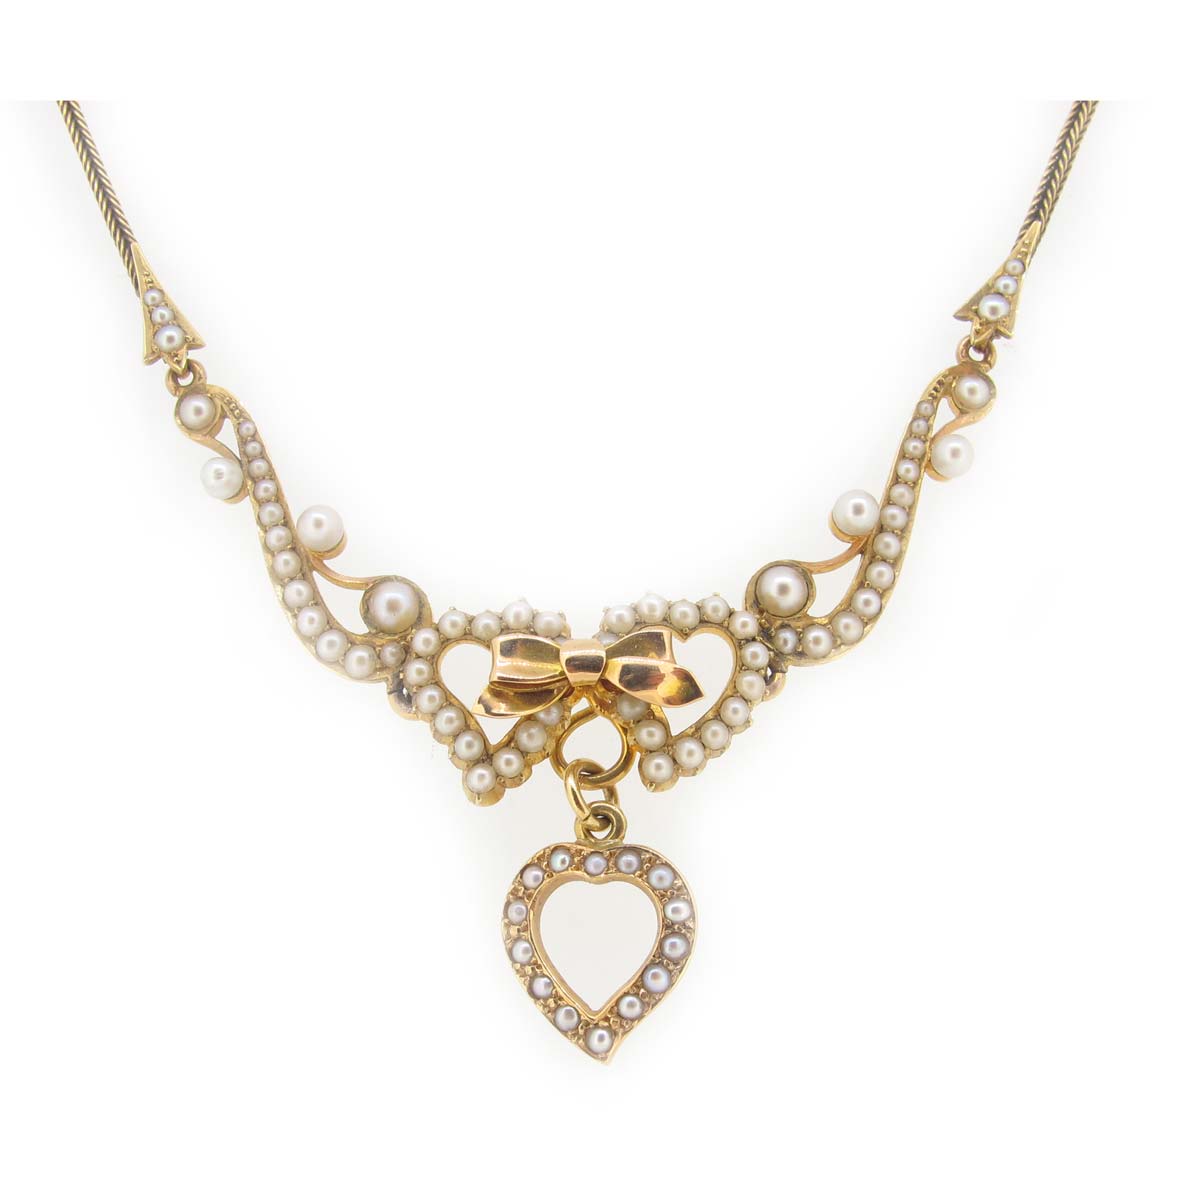 Antique gold & pearl neckalce